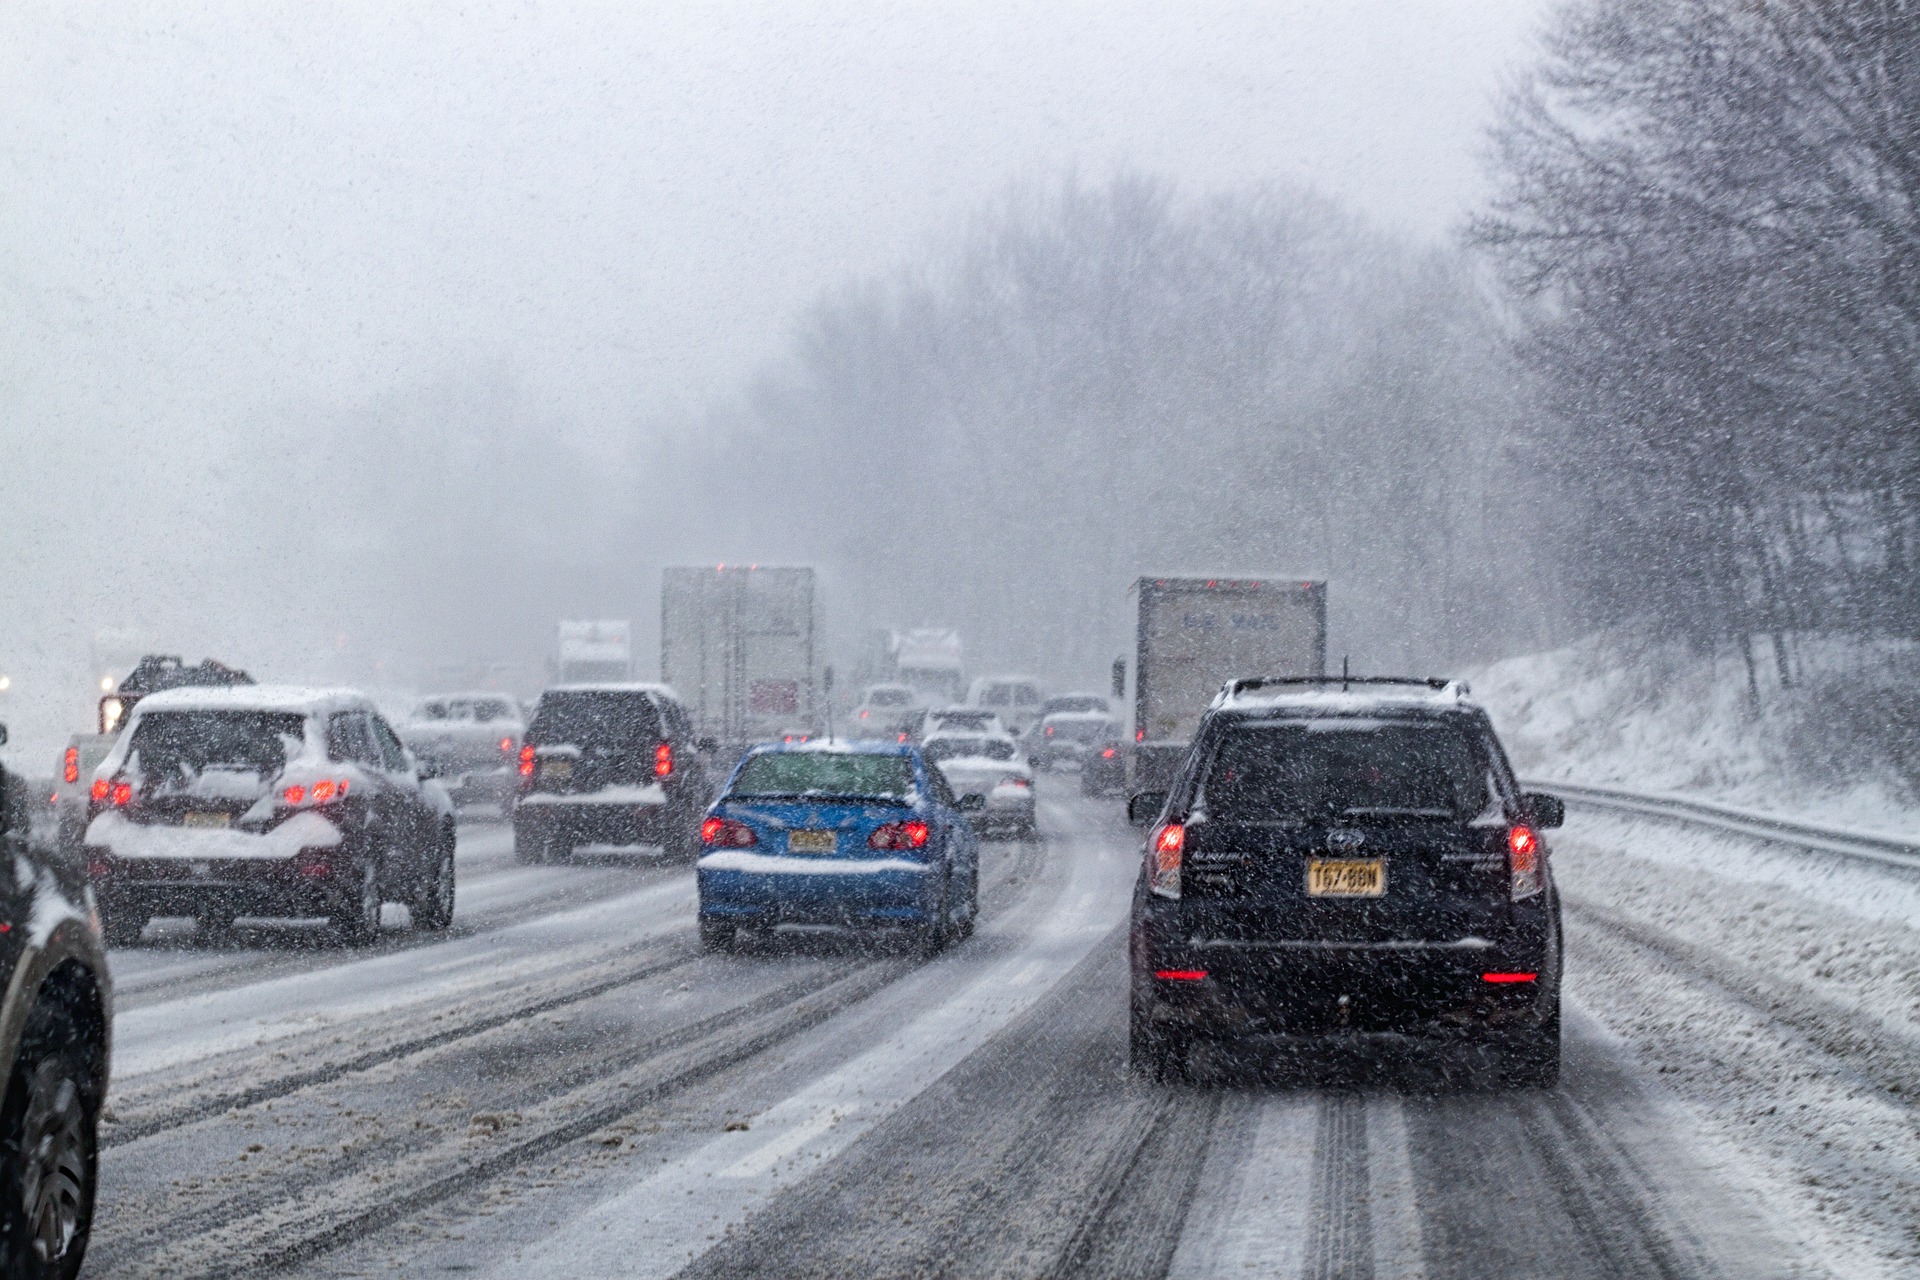 Cómo conducir con nieve o hielo: 10 consejos imprescindibles para circular de forma segura